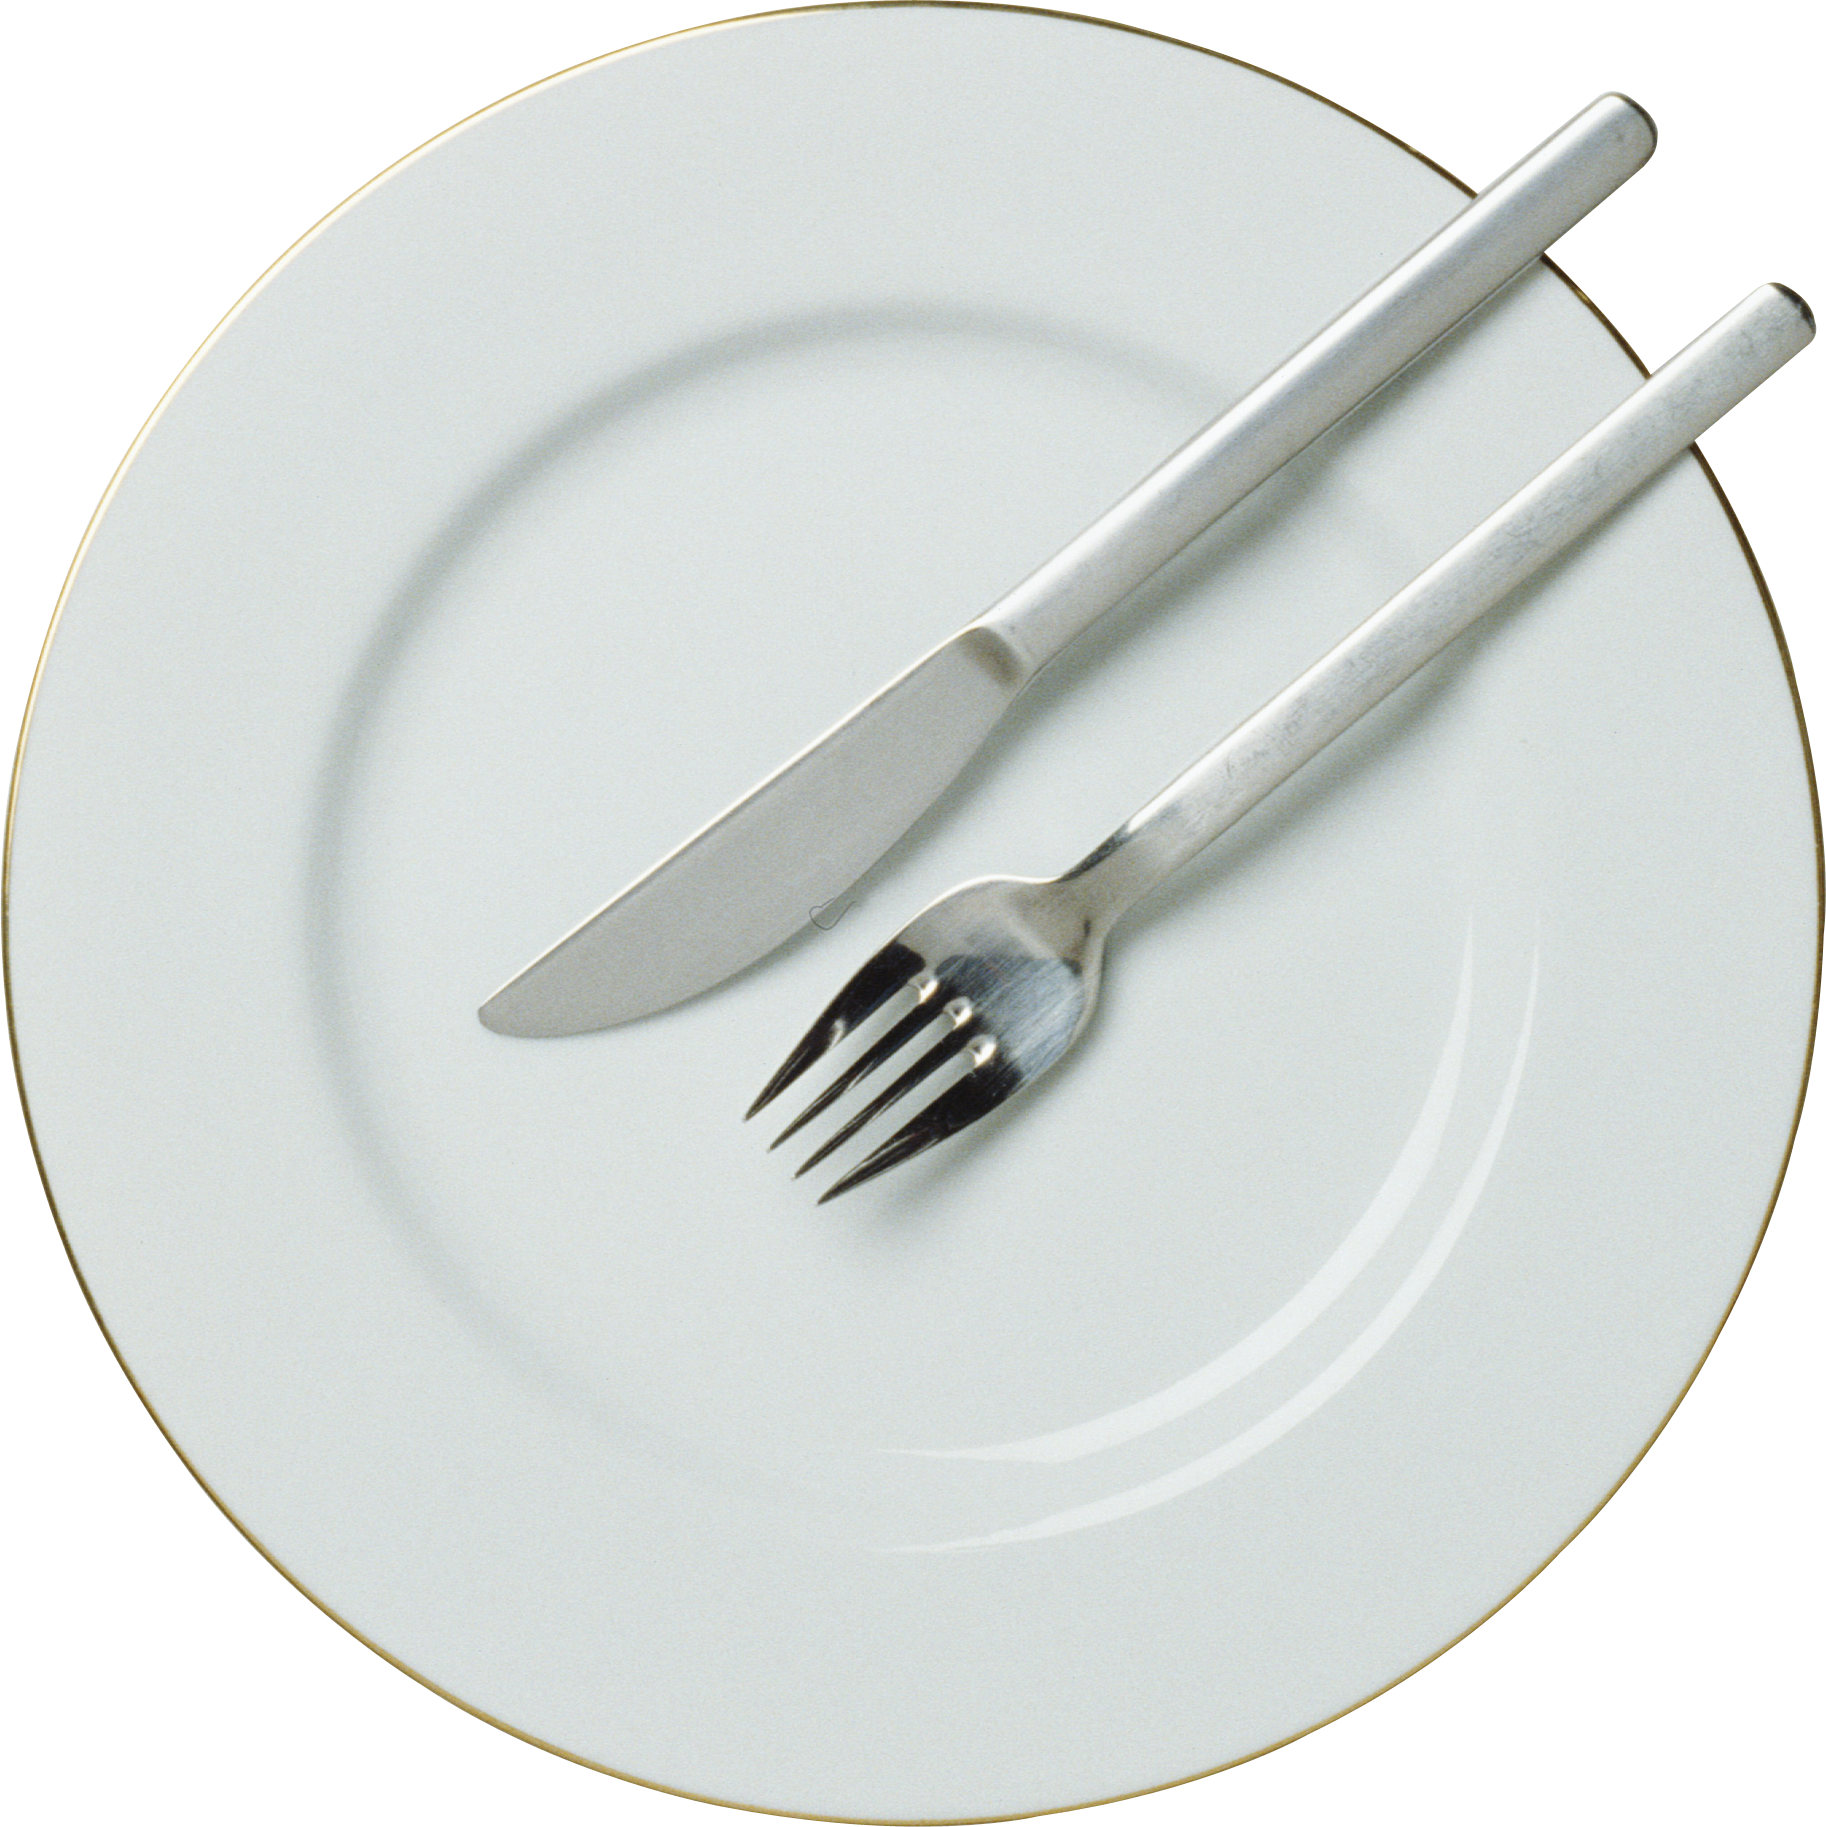 knife clipart silverware plate